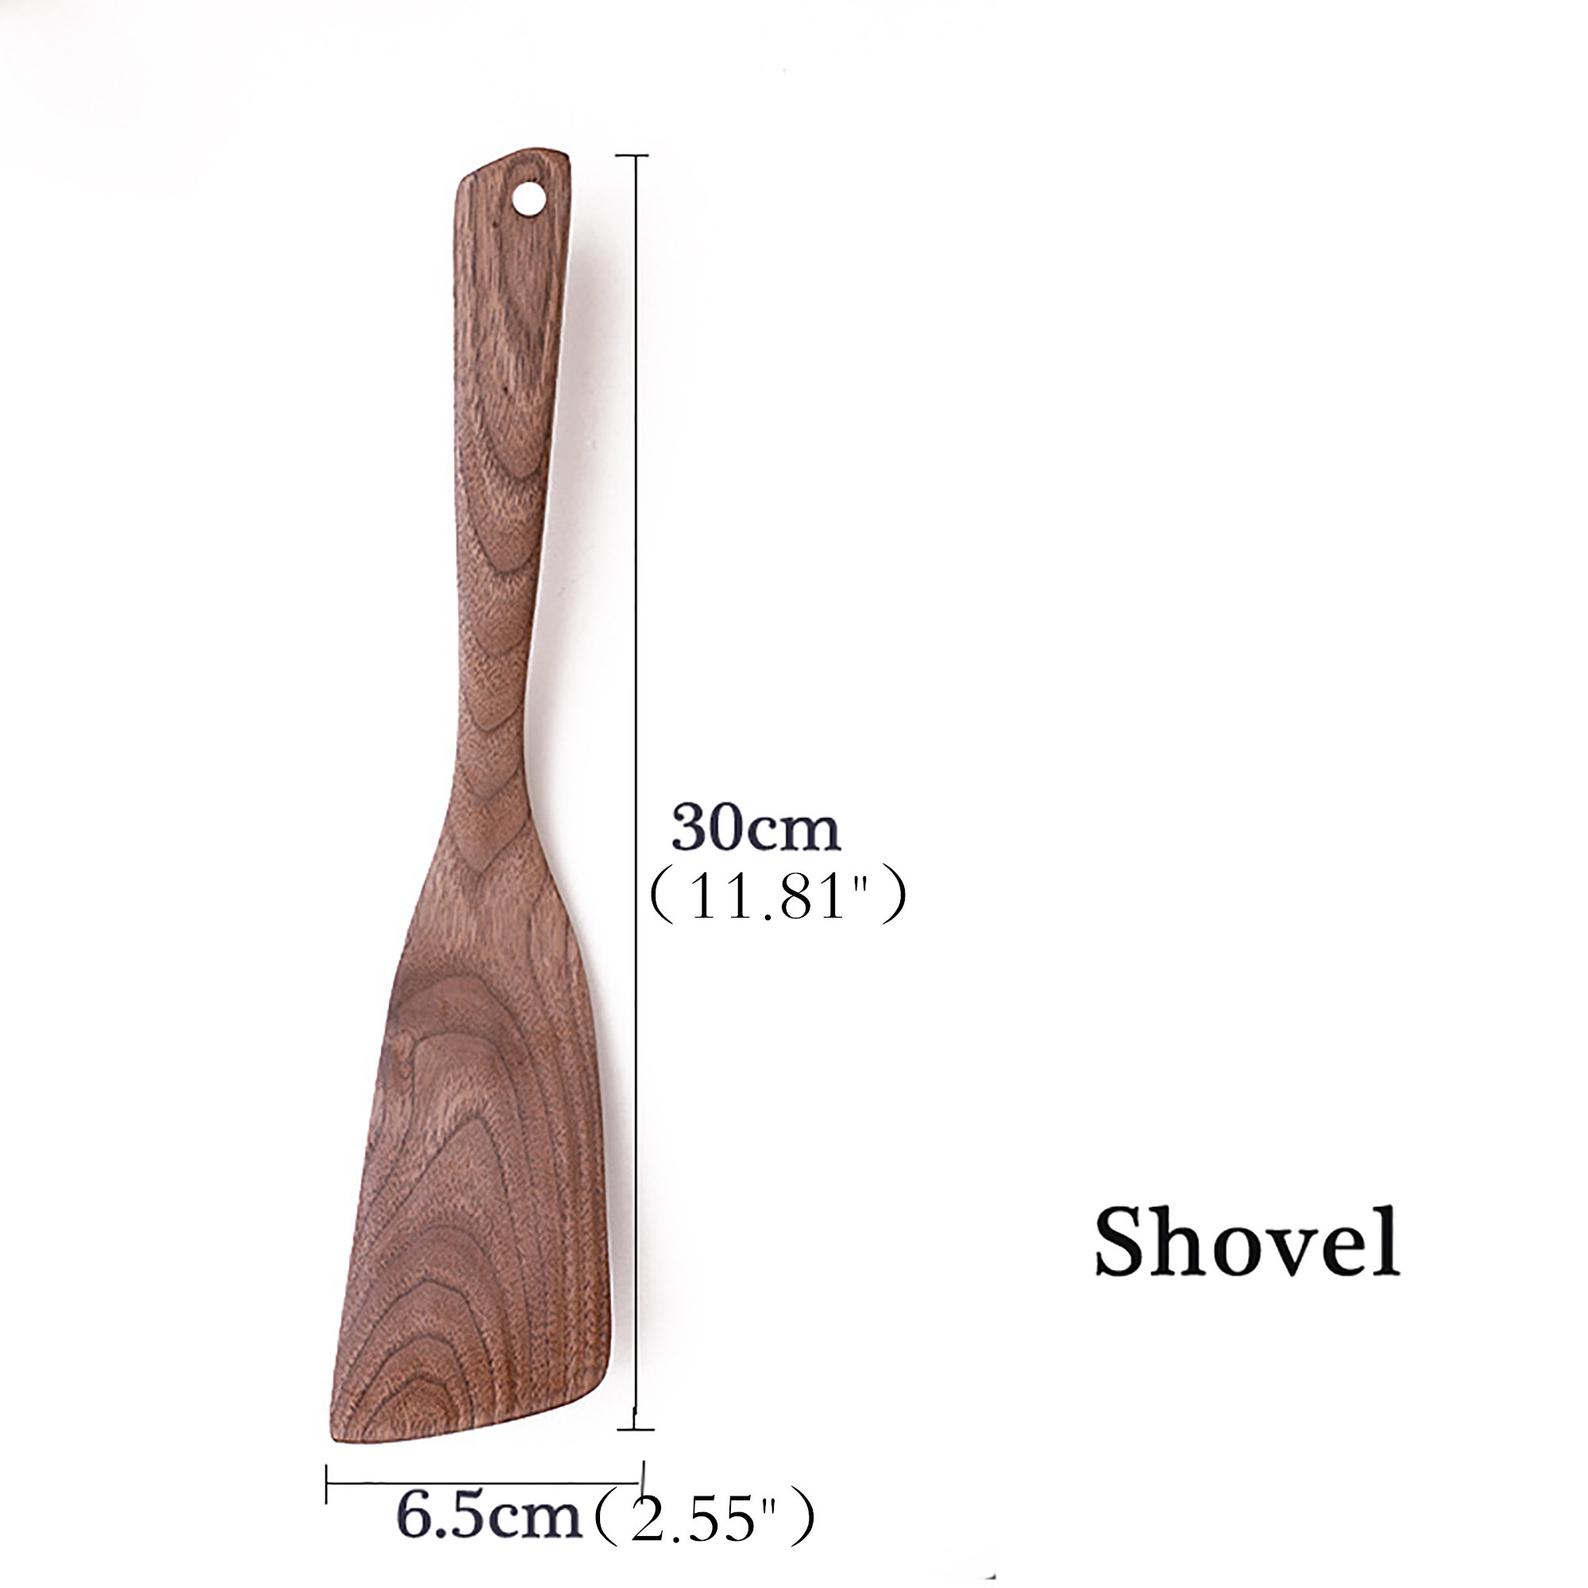 Wooden walnut shovel measurements on white background